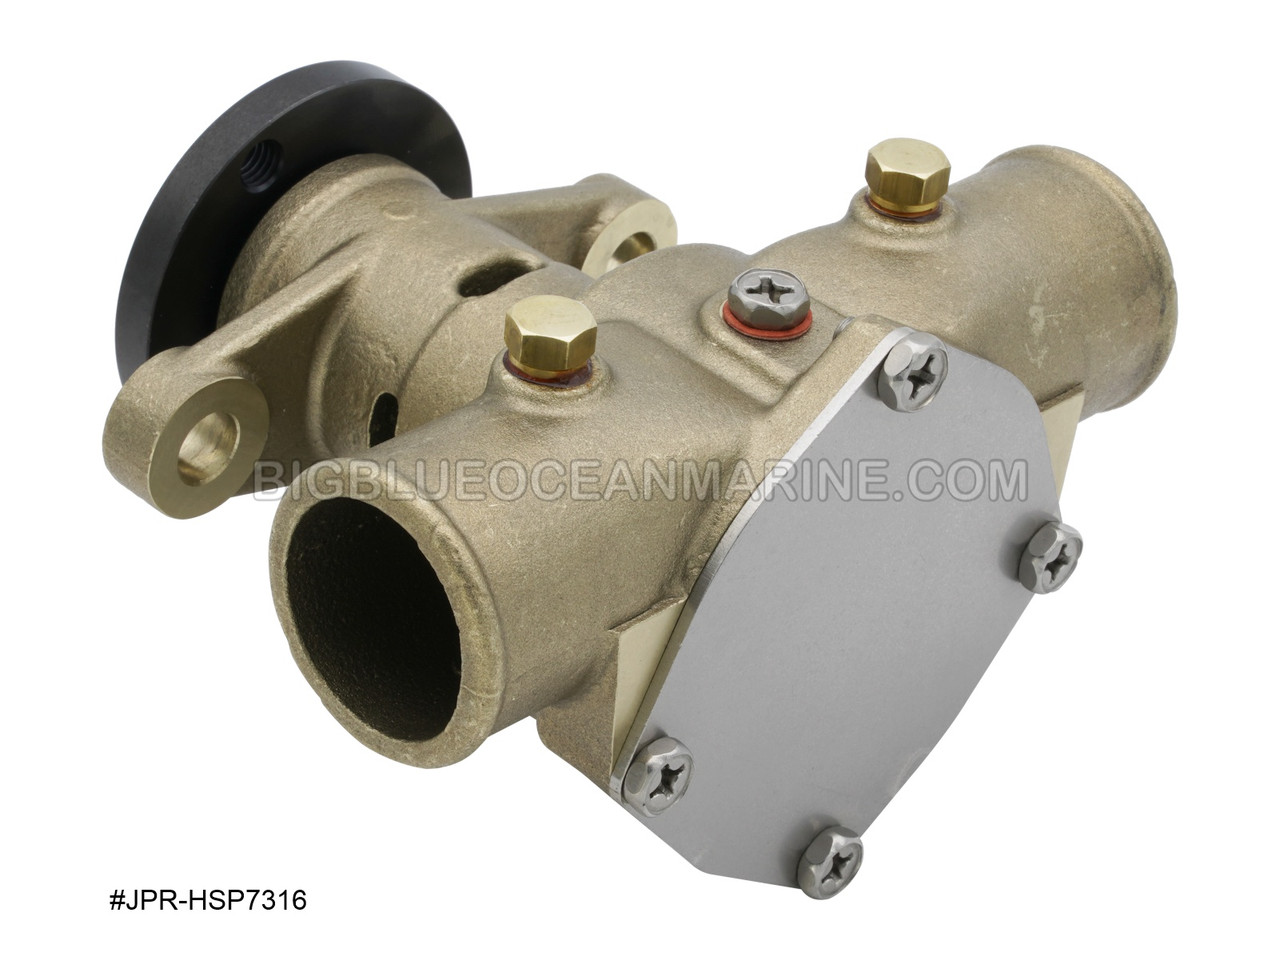 #JPR-HSP7316 JMP Marine Mercury Mercruiser High Speed Engine Cooling Pump. Replaces 879312023, 854179001, Sherwood P1016